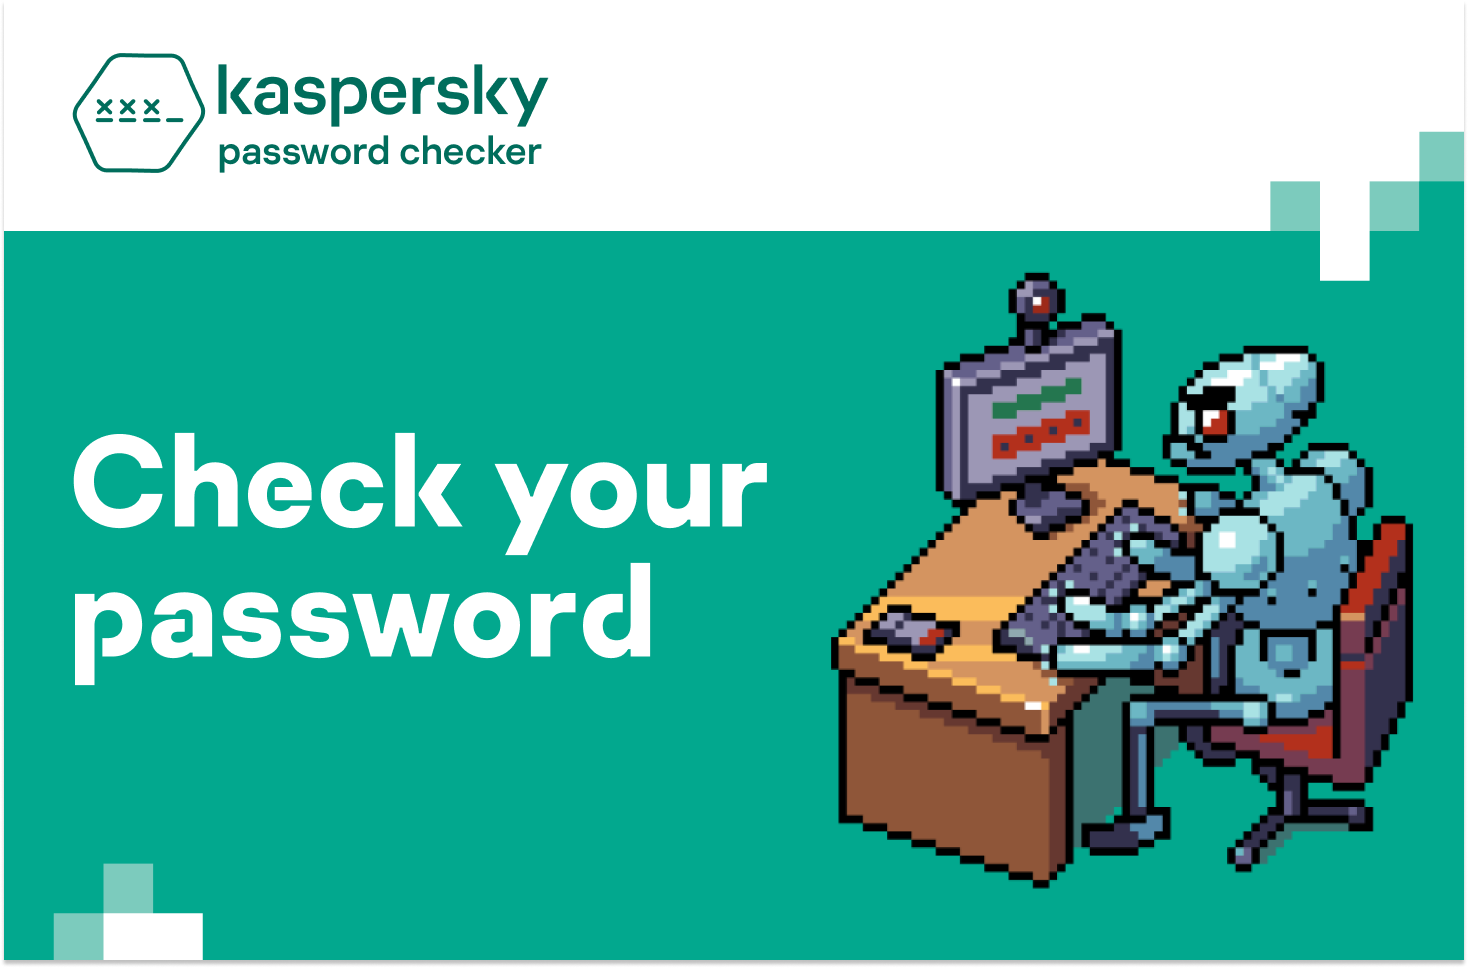 password.kaspersky.com